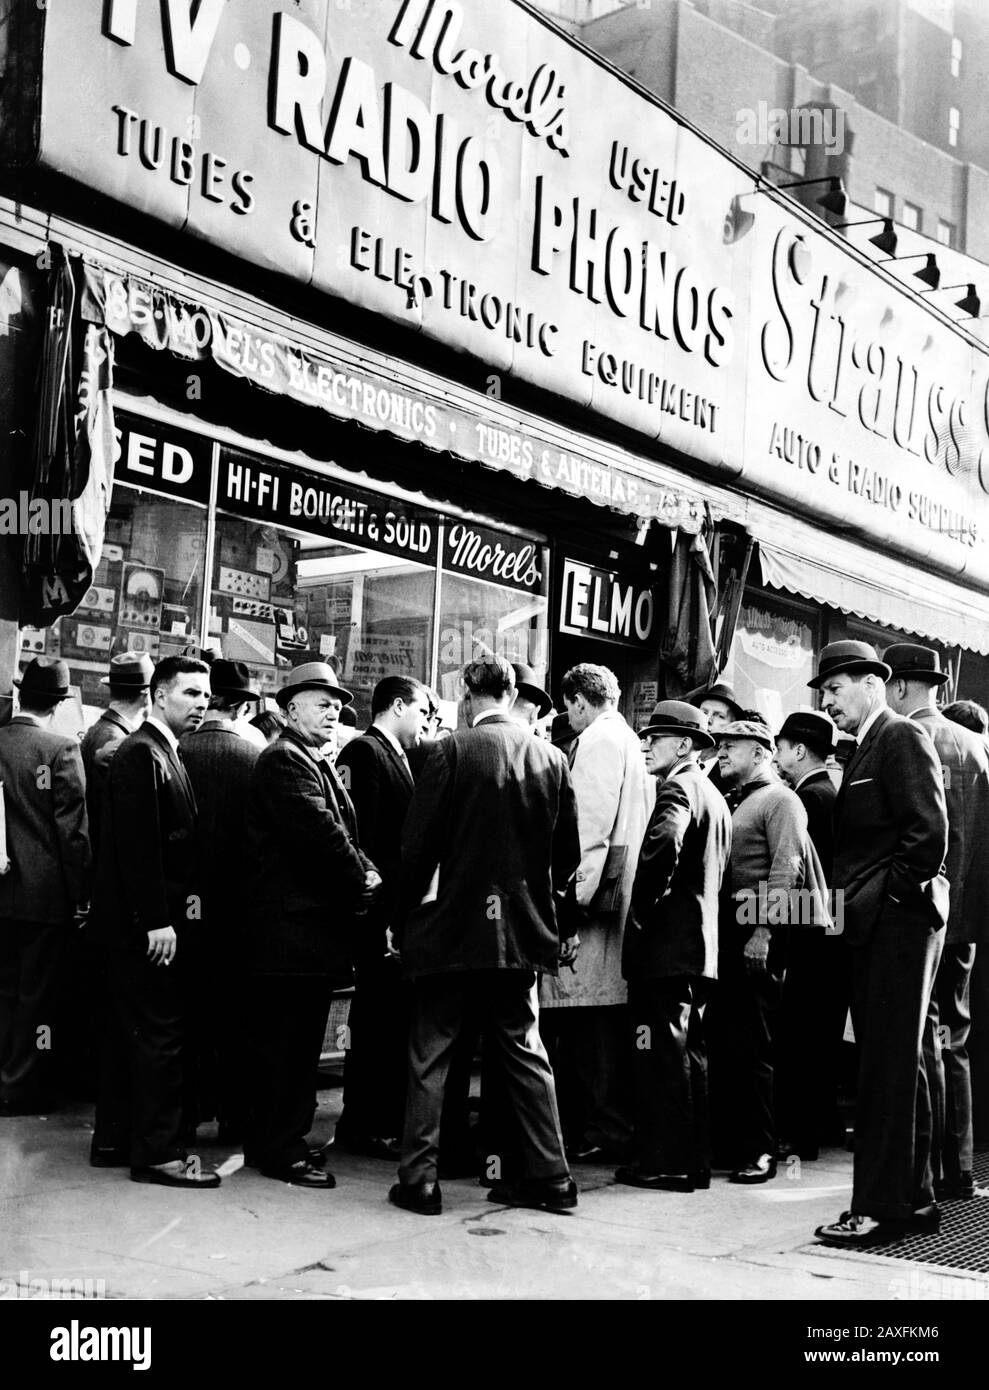 1963 , 22 november , NEW YORK , USA : Crowd listens outside radio shop at Greenwich and Dey Sts. for news on assassination in Dallas ( Texas ) of  american JOHN Fitzgerald KENNEDY ( 1917 - 1963 ) president of US . Photo by Orlando Fernandez - PRESIDENTE DEGLI STATI UNITI D' AMERICA - cravatta  - tie - CASA BIANCA - WHITE HOUSE - POLITICO - POLITIC - POLITICIAN - POLITICA  - ARCHIVIO GBB --- Archivio GBB Stock Photo